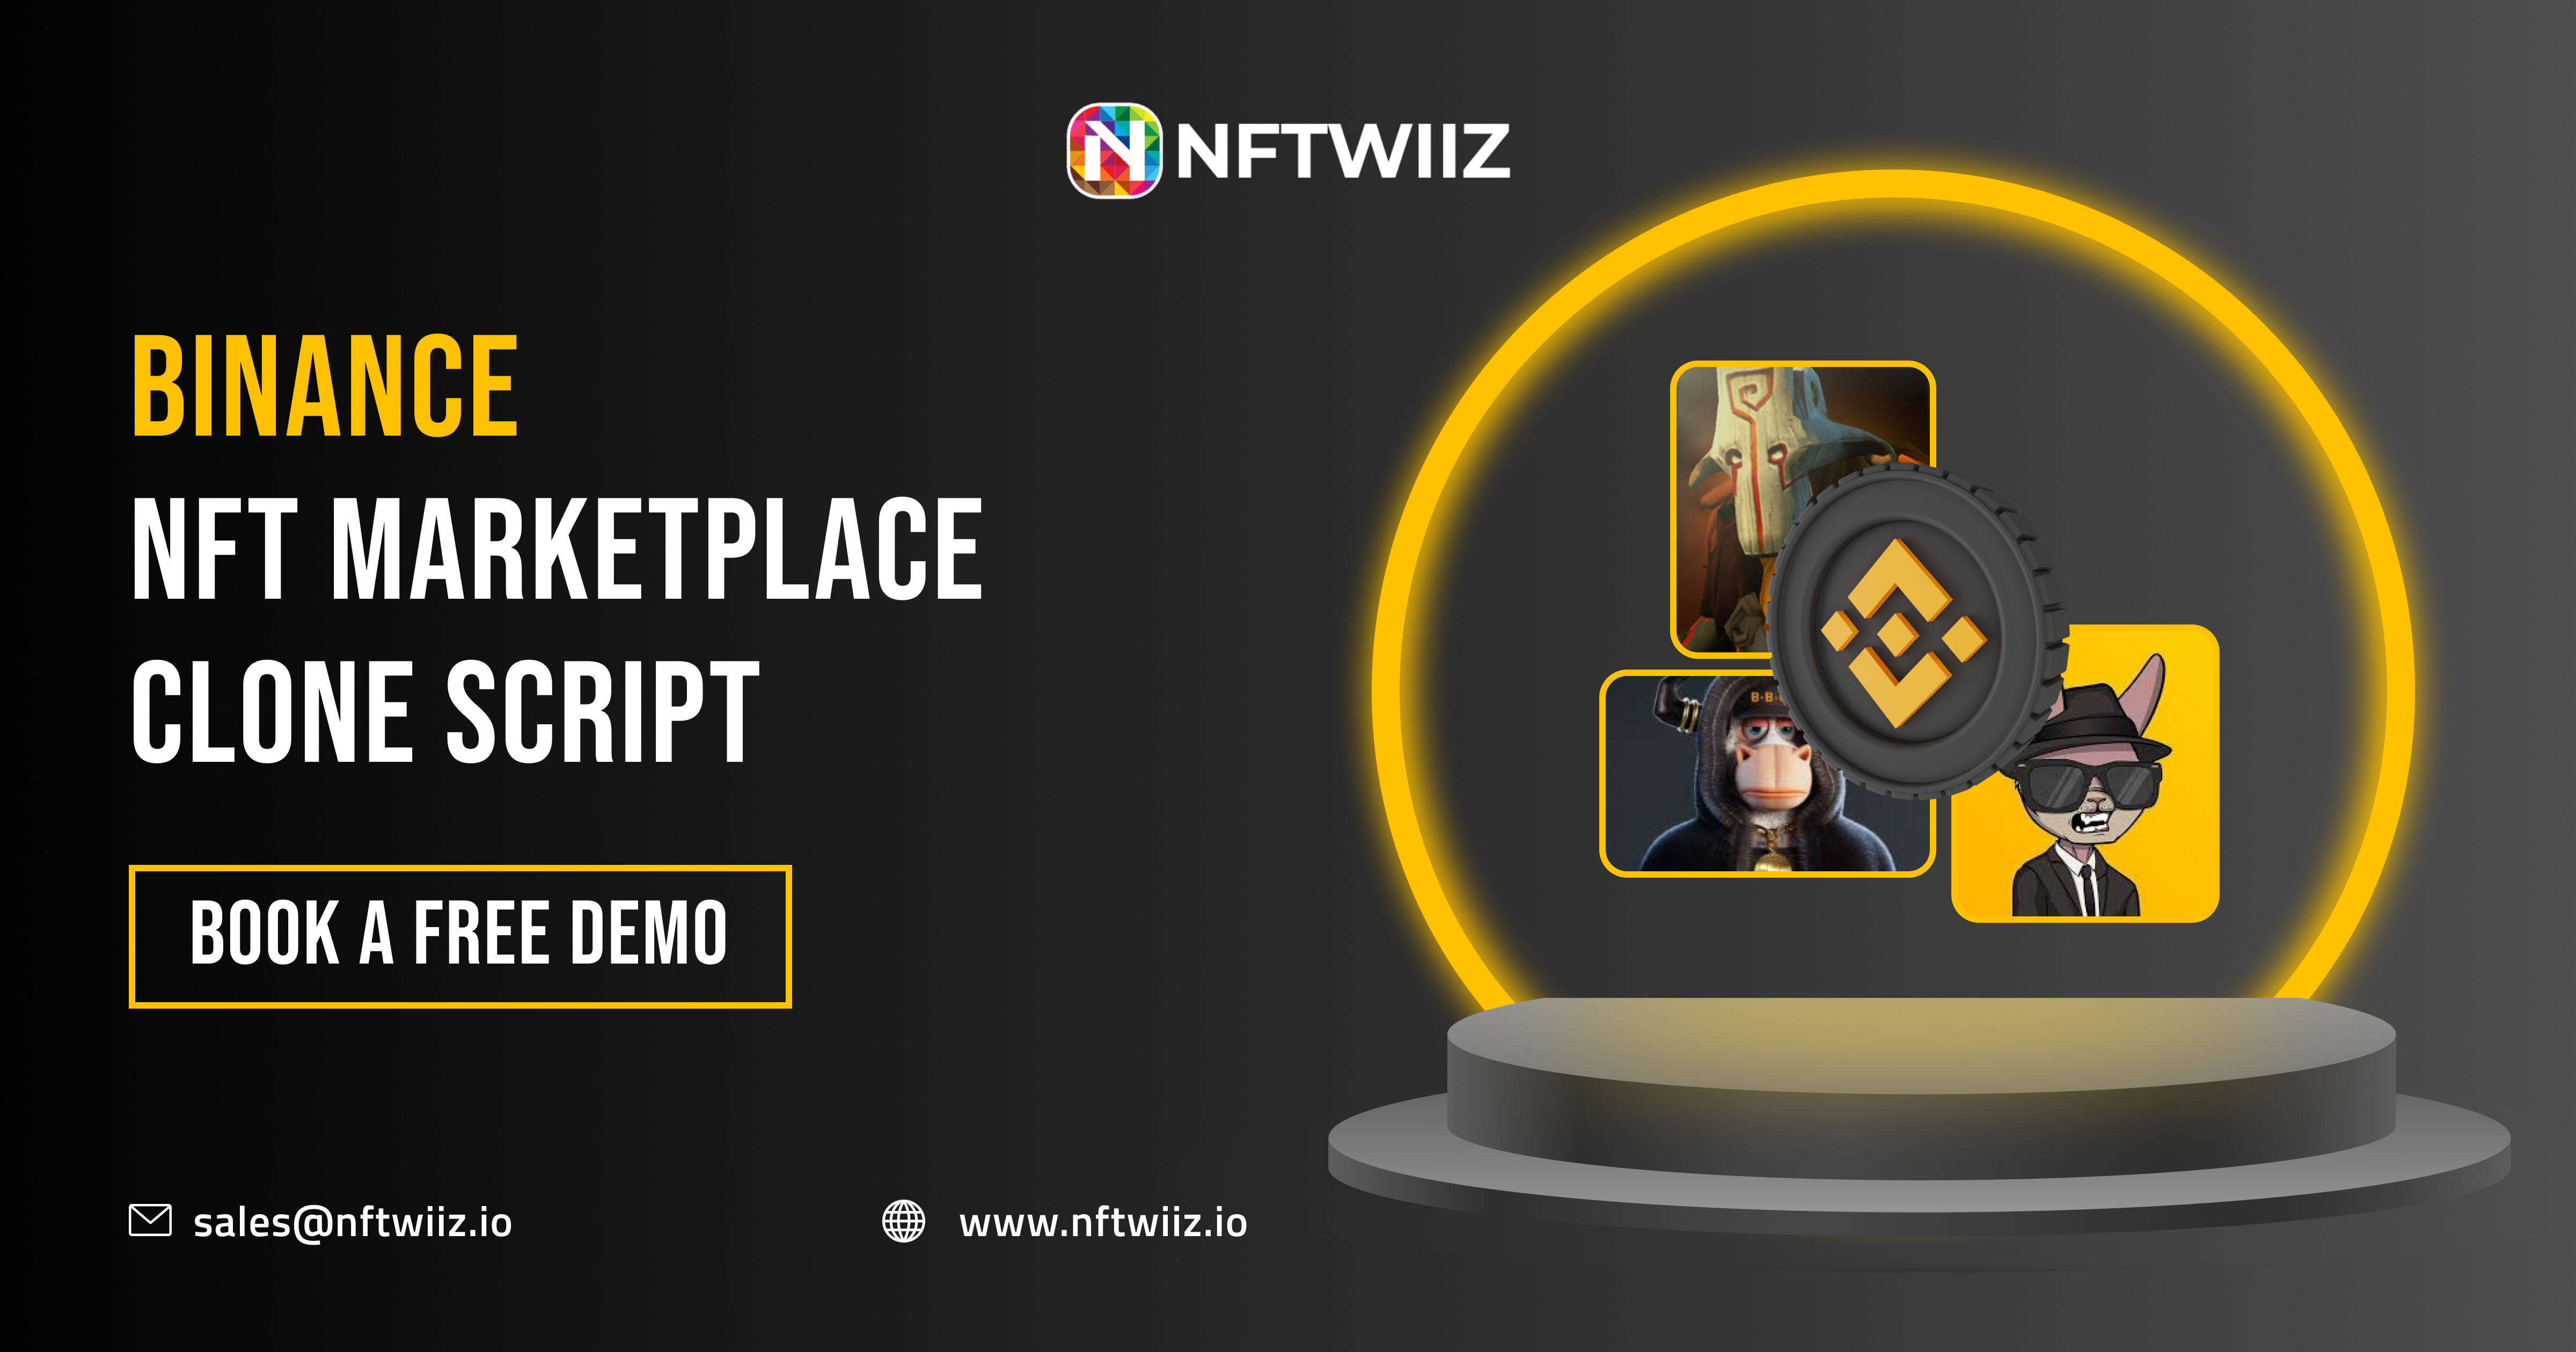 Binance NFT Marketplace Clone Script | NFTWIIZ